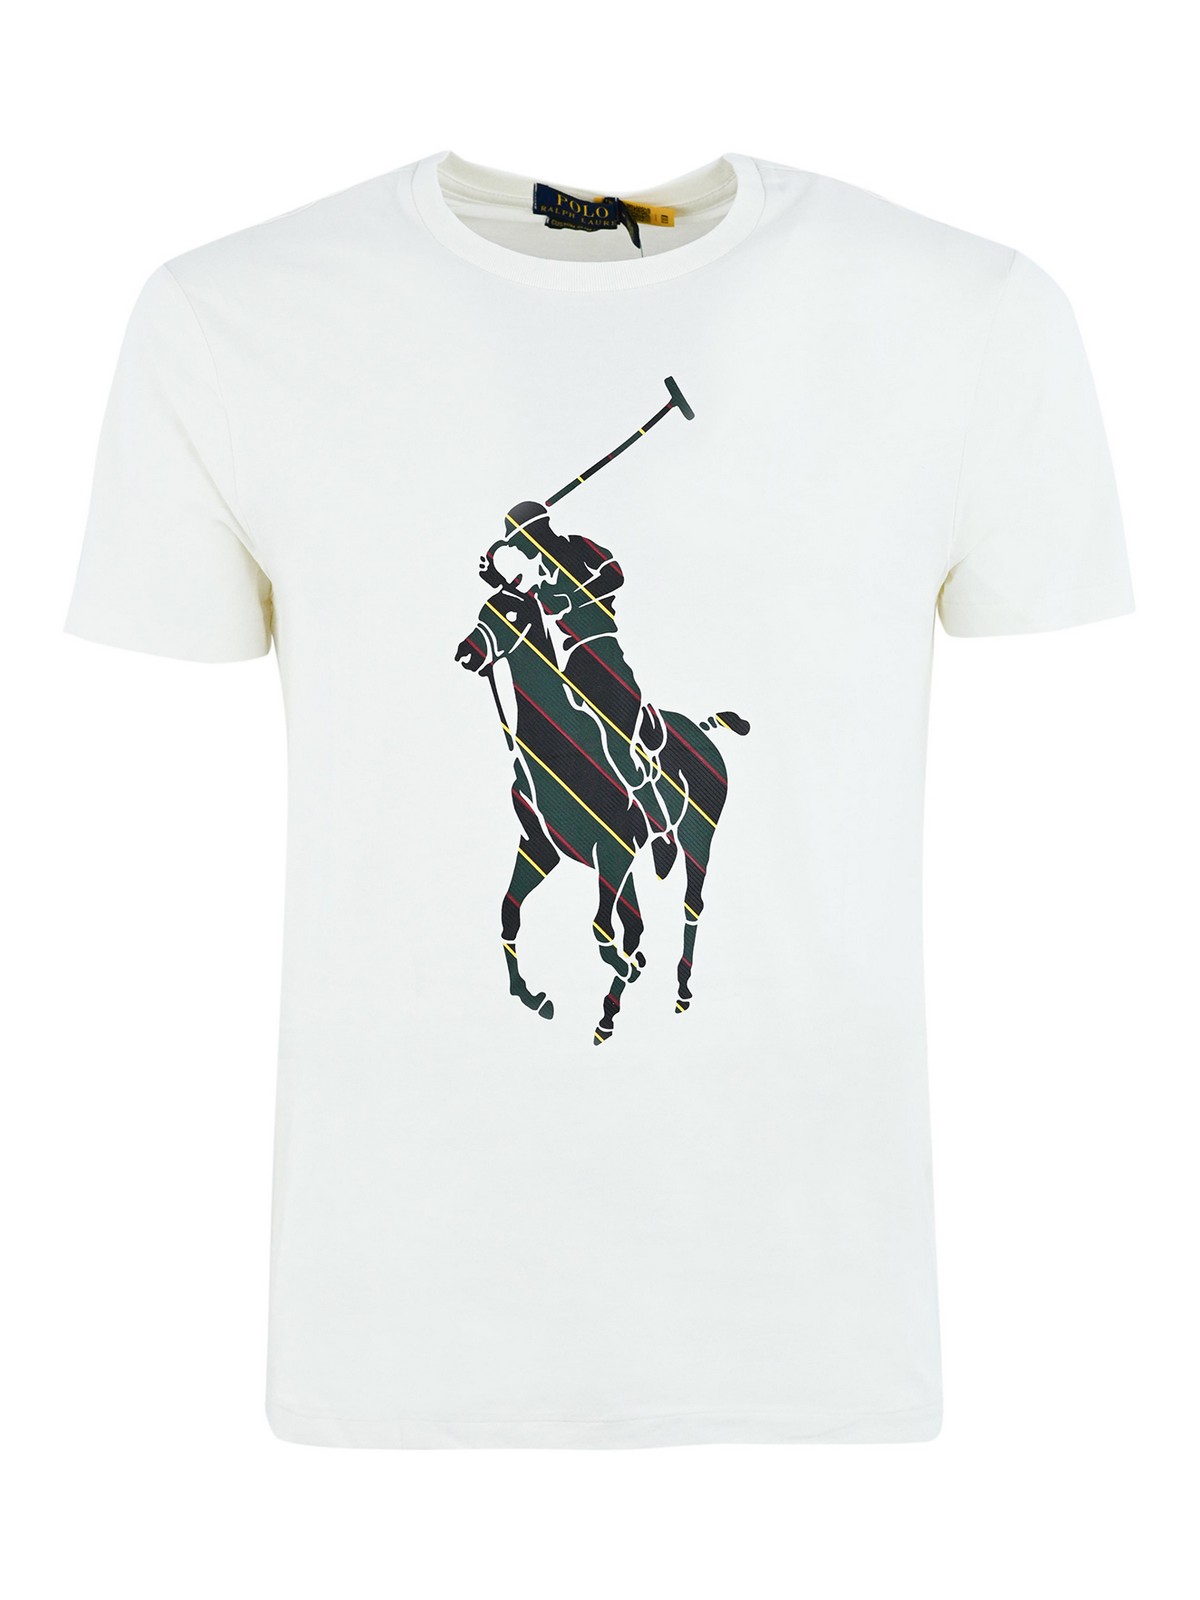 T-shirts Polo Ralph Lauren - Big pony Tee - 710853276001 